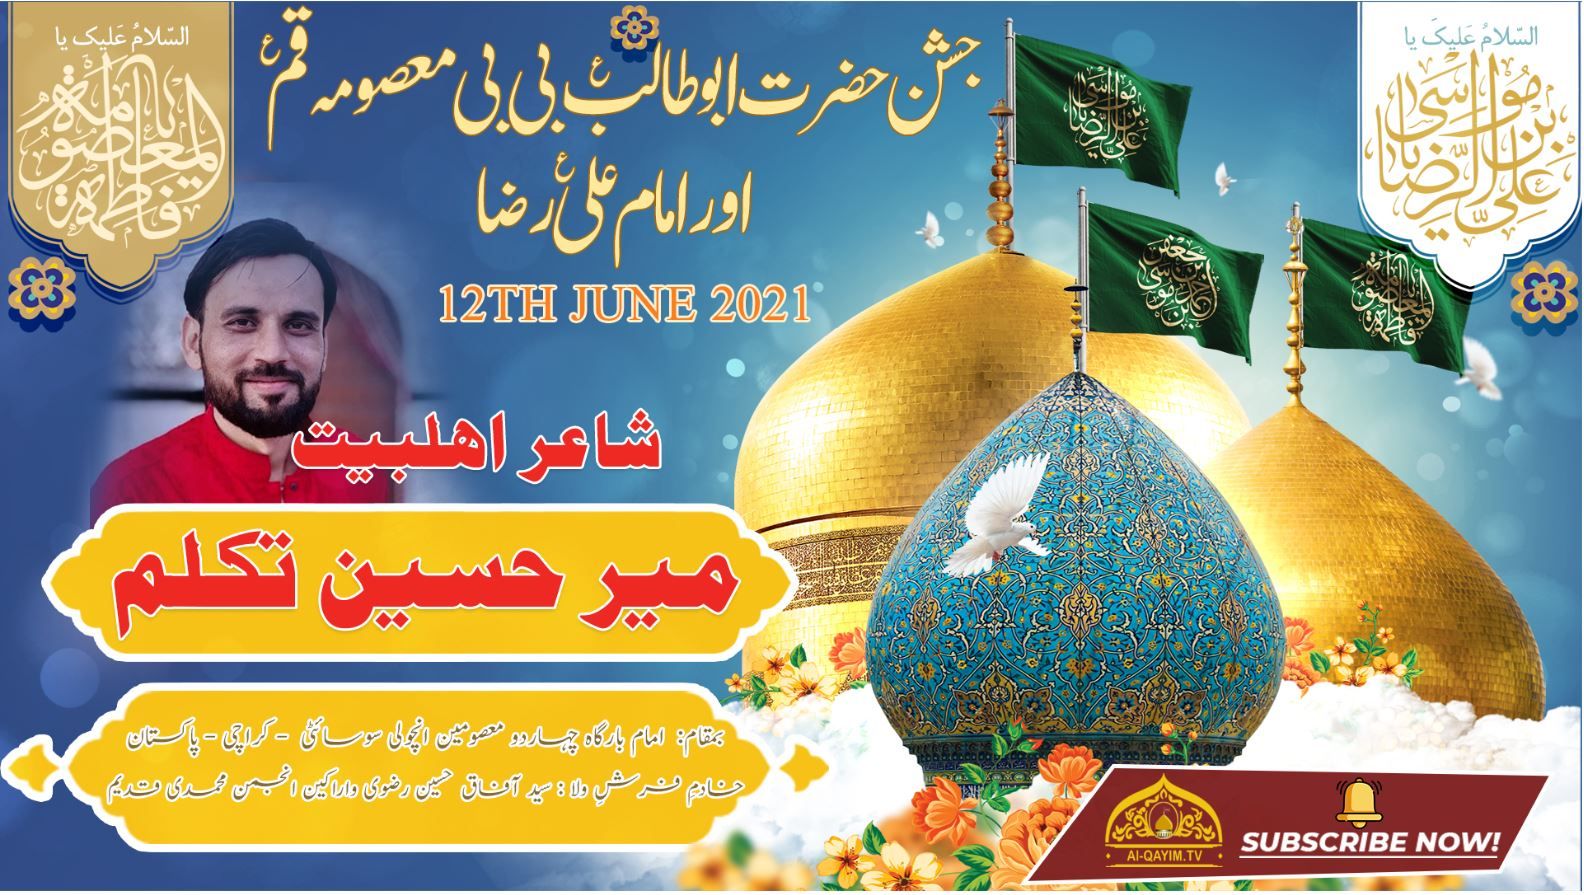 Mir Hussain Takallum | Jashan Bibi Masooma & Imam Ali Raza - 12 June 2021 - Ancholi - Karachi